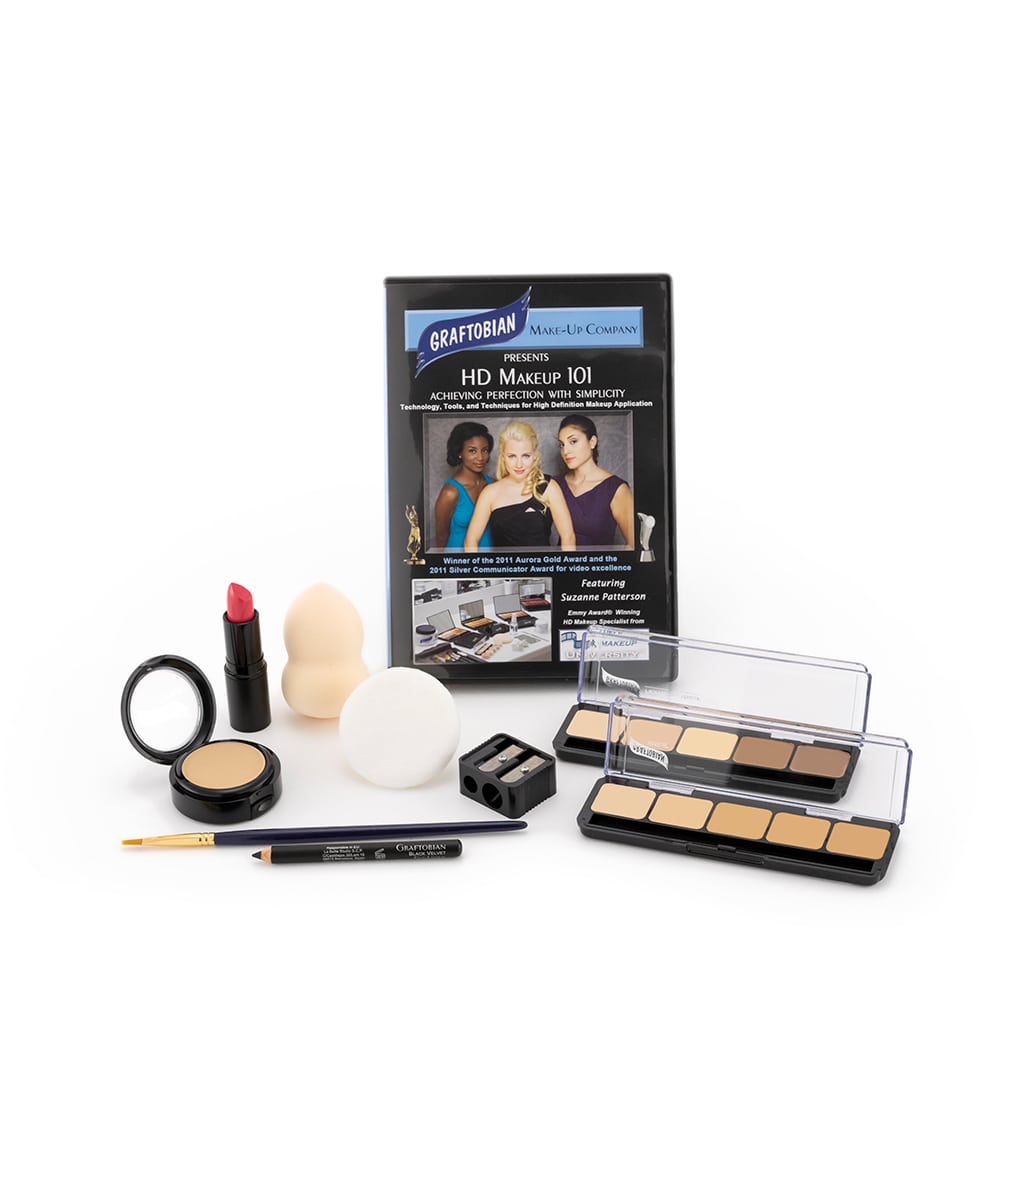 Cat Makeup Kit  Graftobian Professional Makeup – Graftobian Make-Up Company